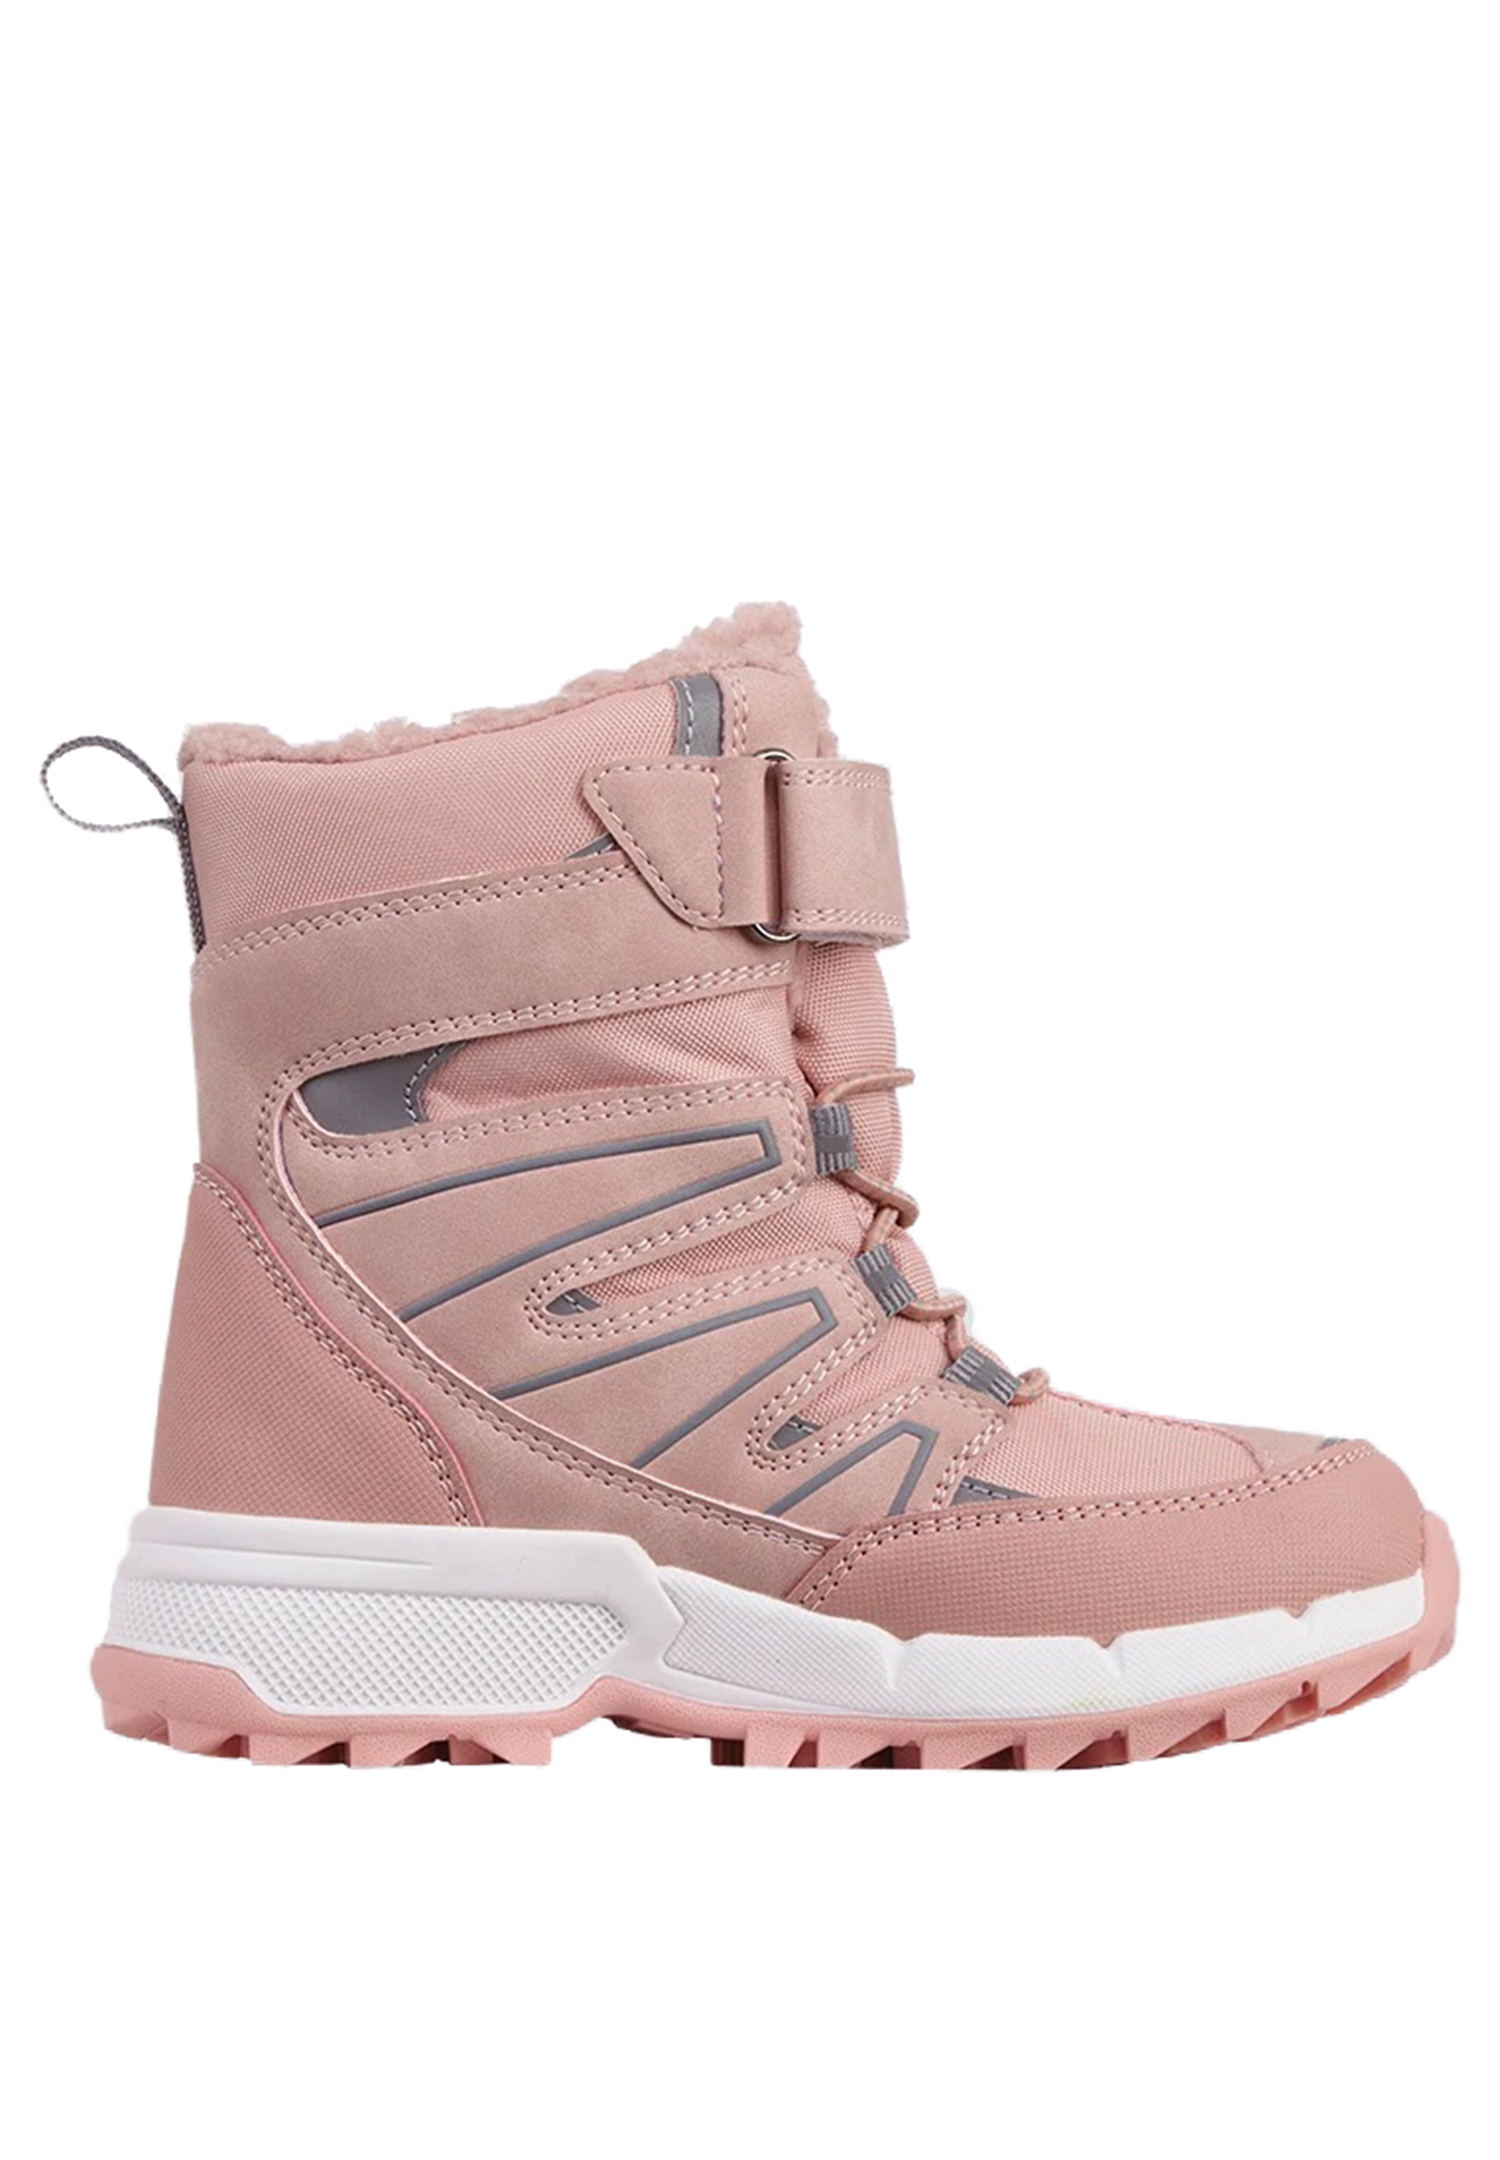 Kappa Mädchen Stiefel Sneaker Winterschuh gefüttert Stylecode 260975K rosa